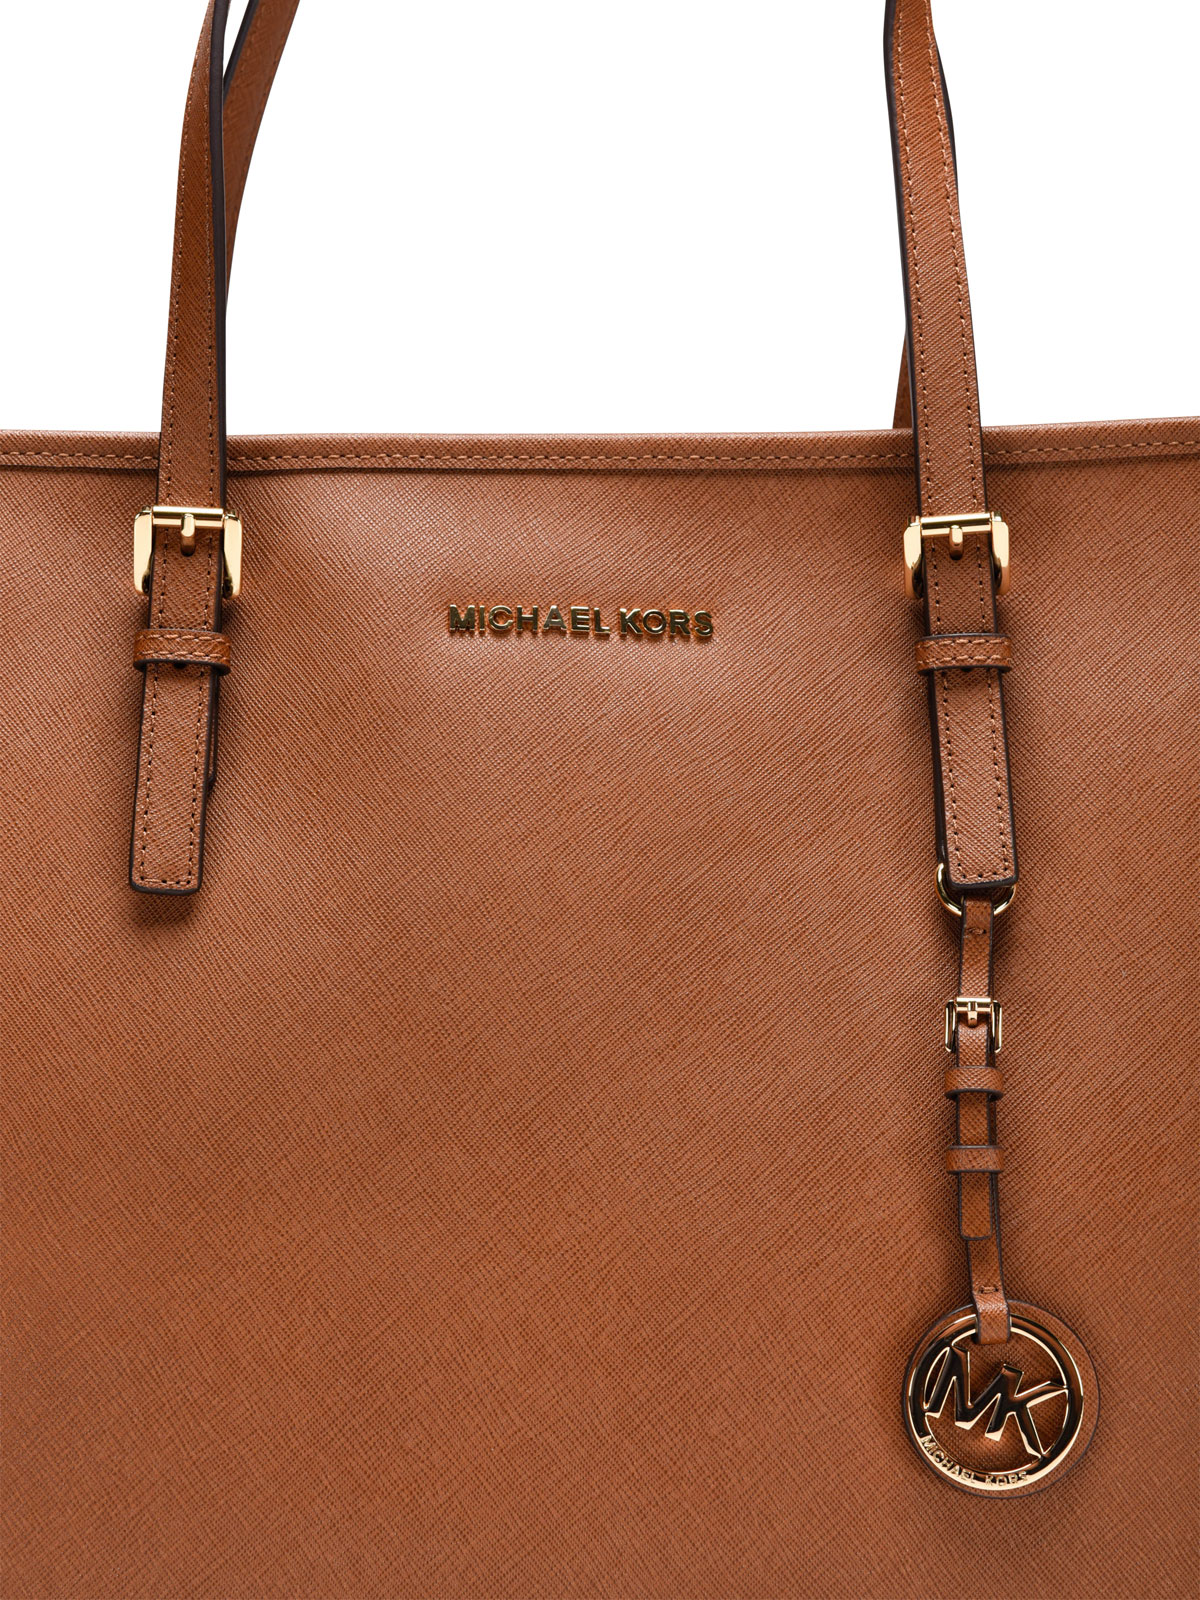 Michael Kors Leather JET SET TRAVEL Bag with Metal Logo and Charm